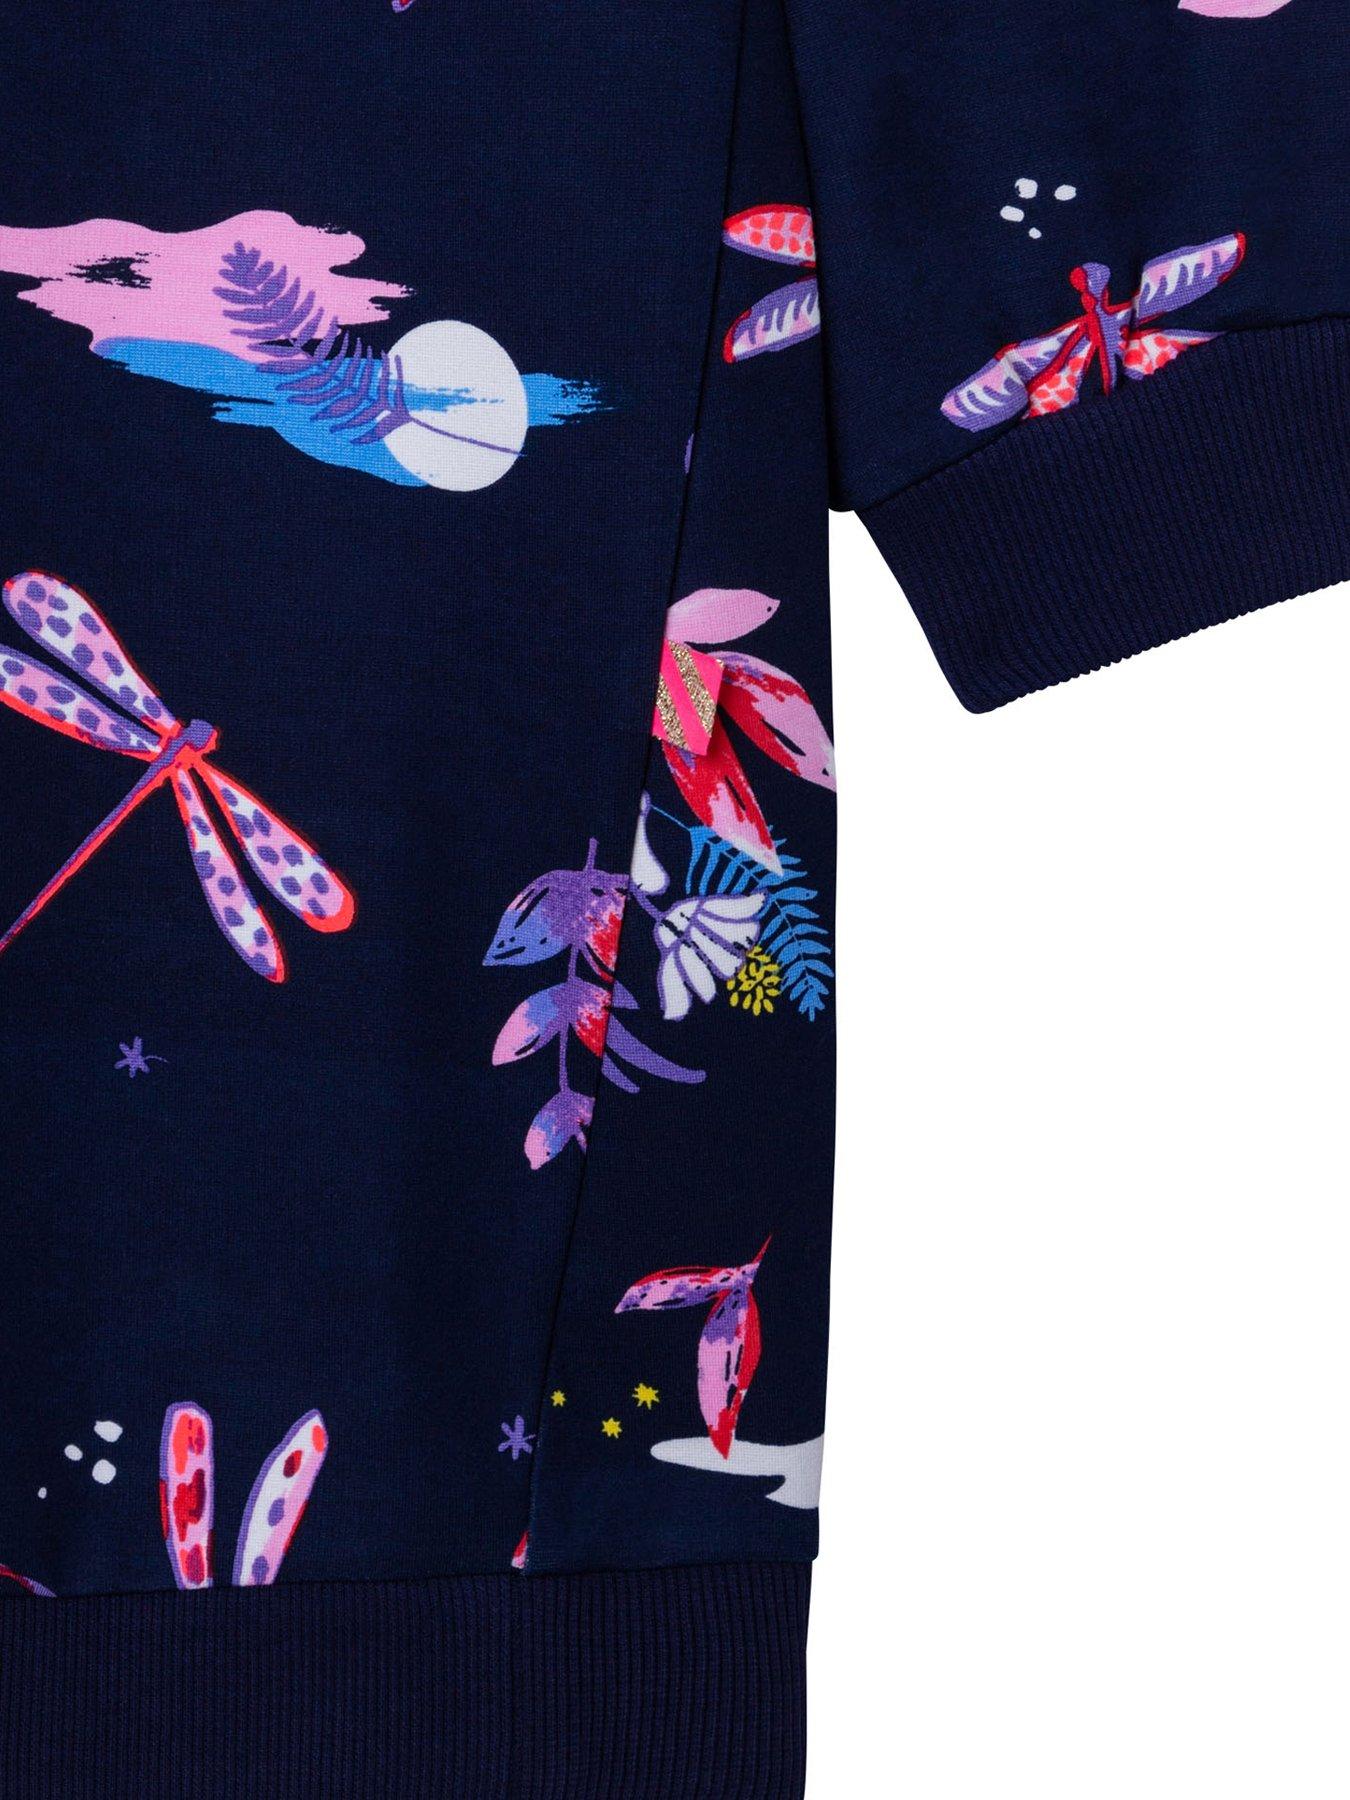  Girls Dragonfly Print Sweat Dress - Navy